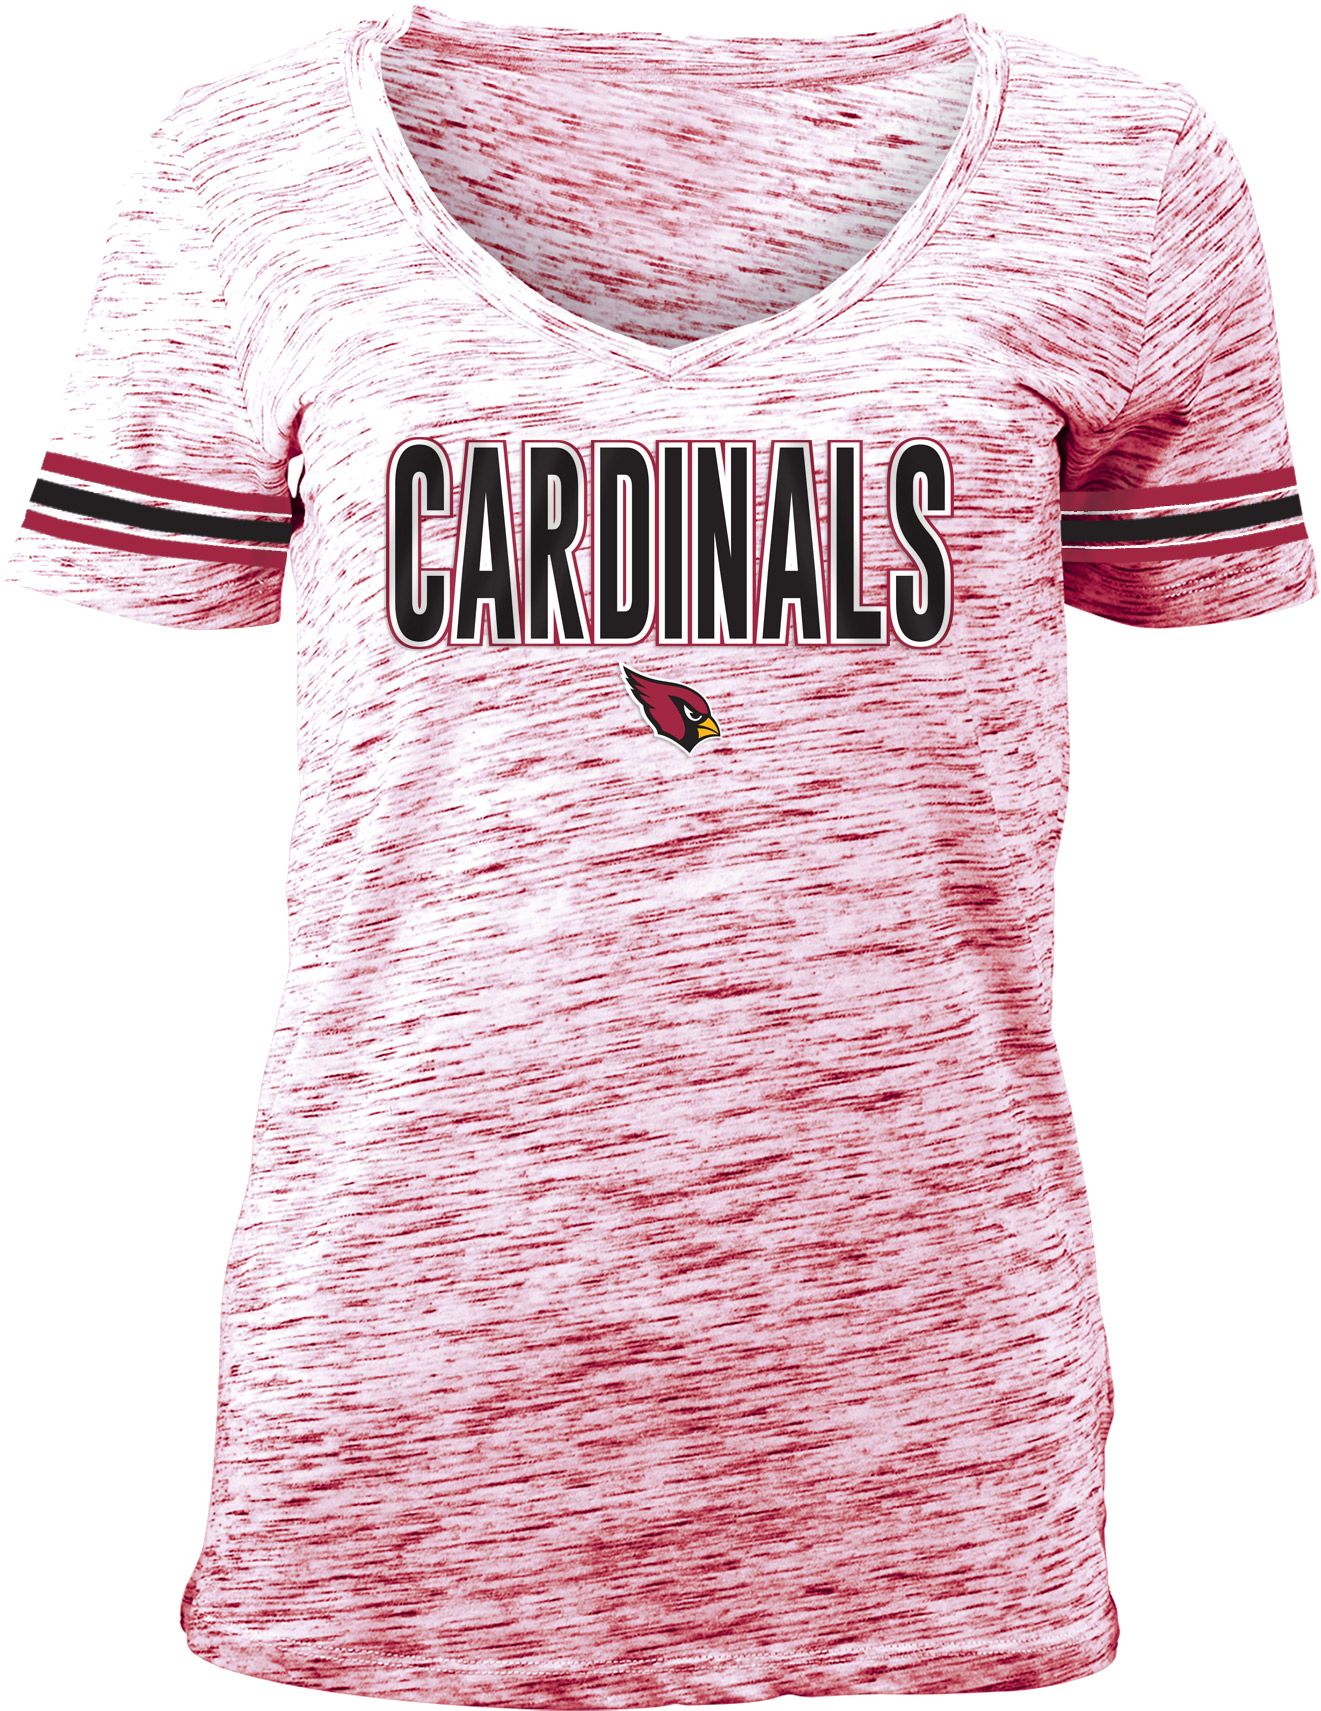 az cardinals women's shirts